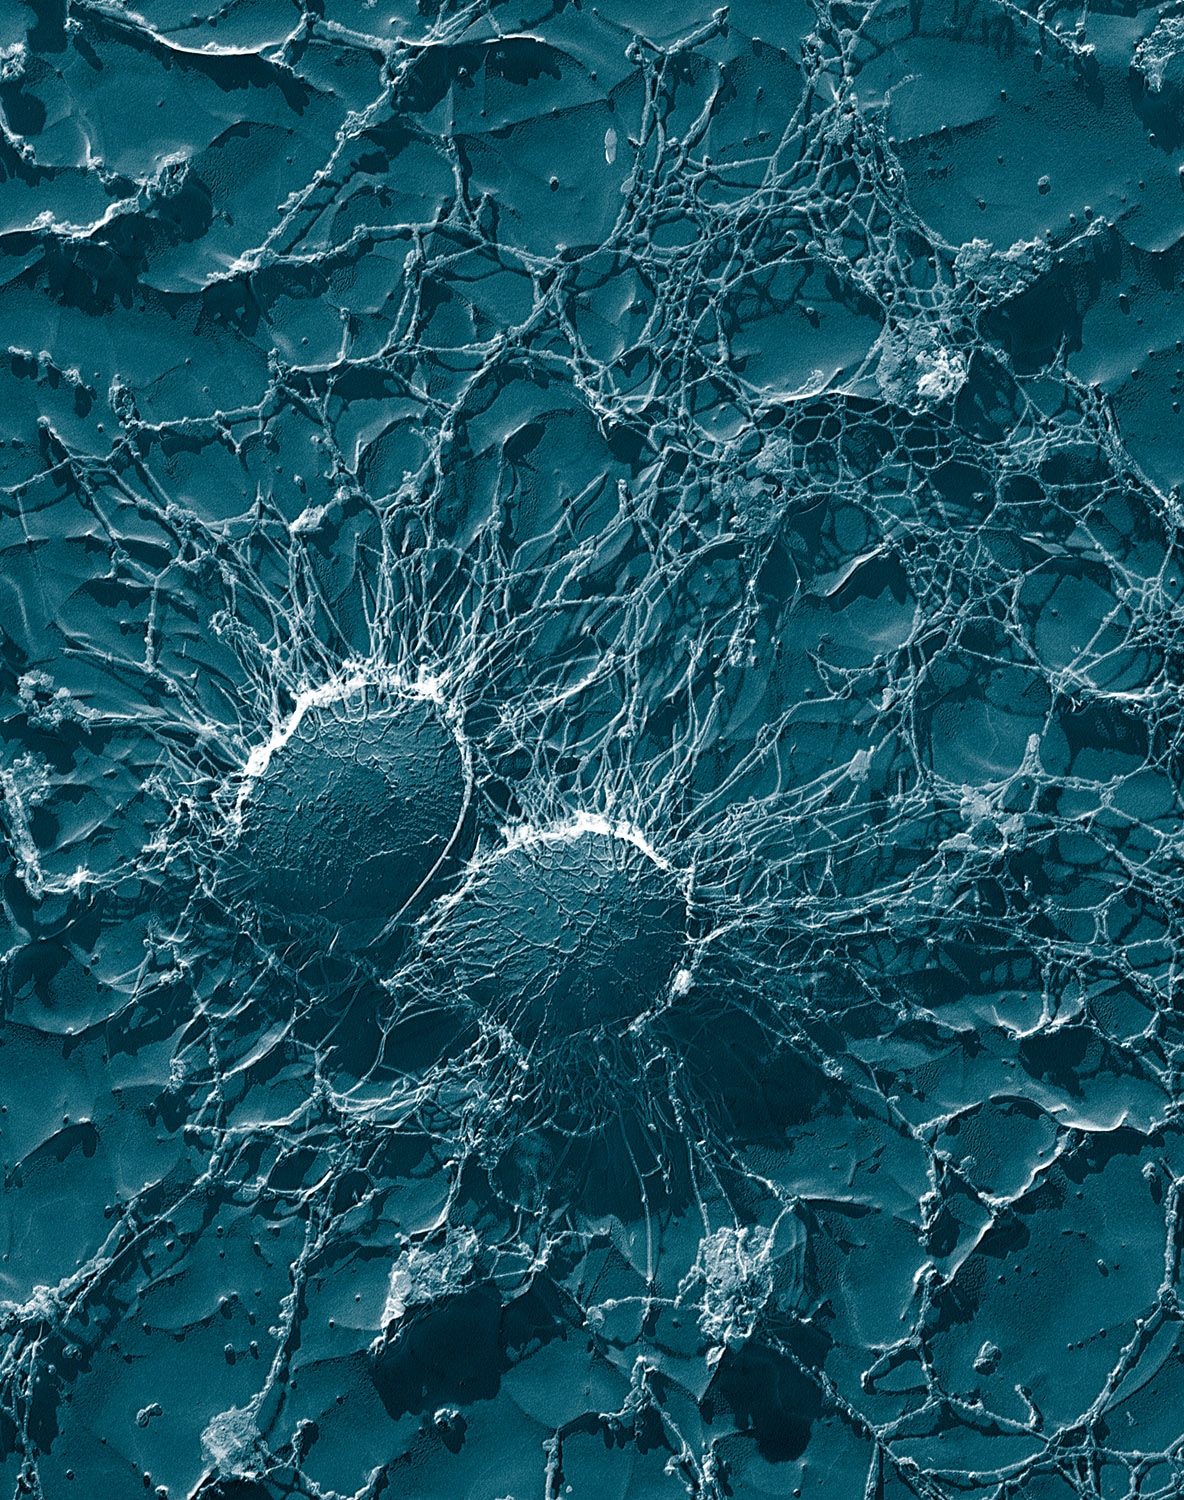 Staphylococcus aureus (50,000x)